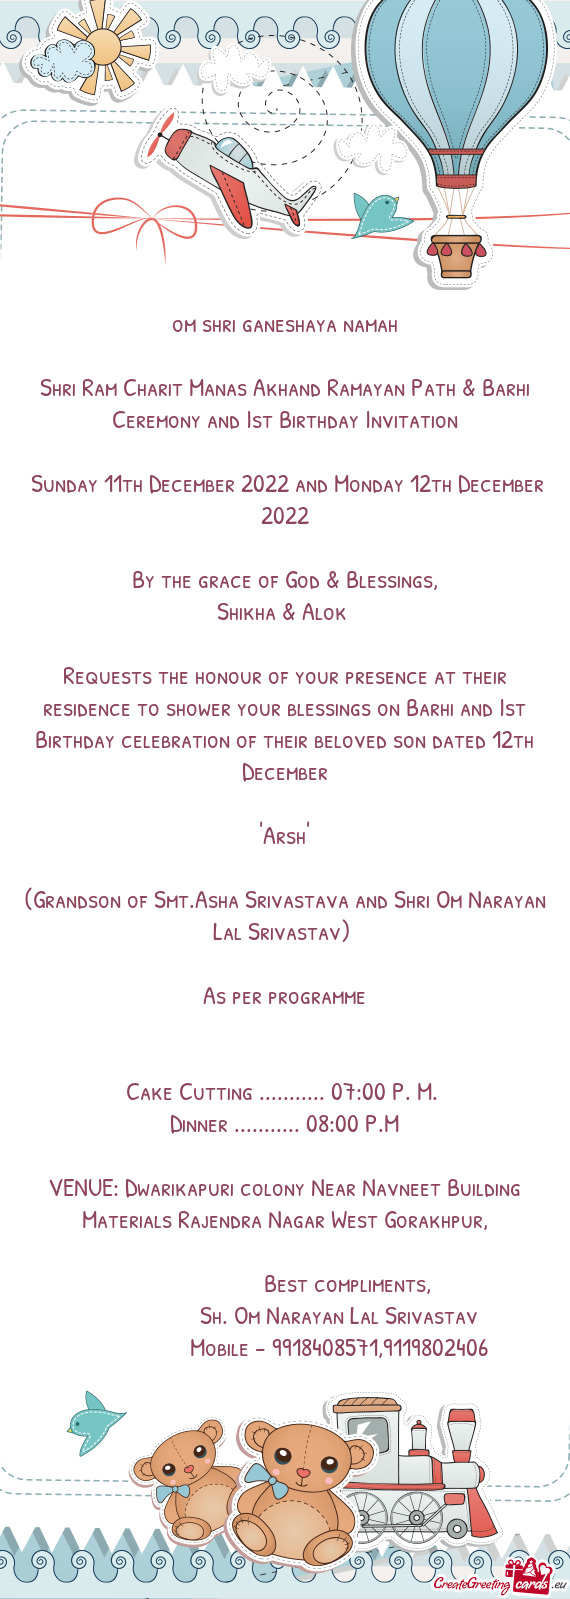 Shri Ram Charit Manas Akhand Ramayan Path & Barhi Ceremony and Ist Birthday Invitation